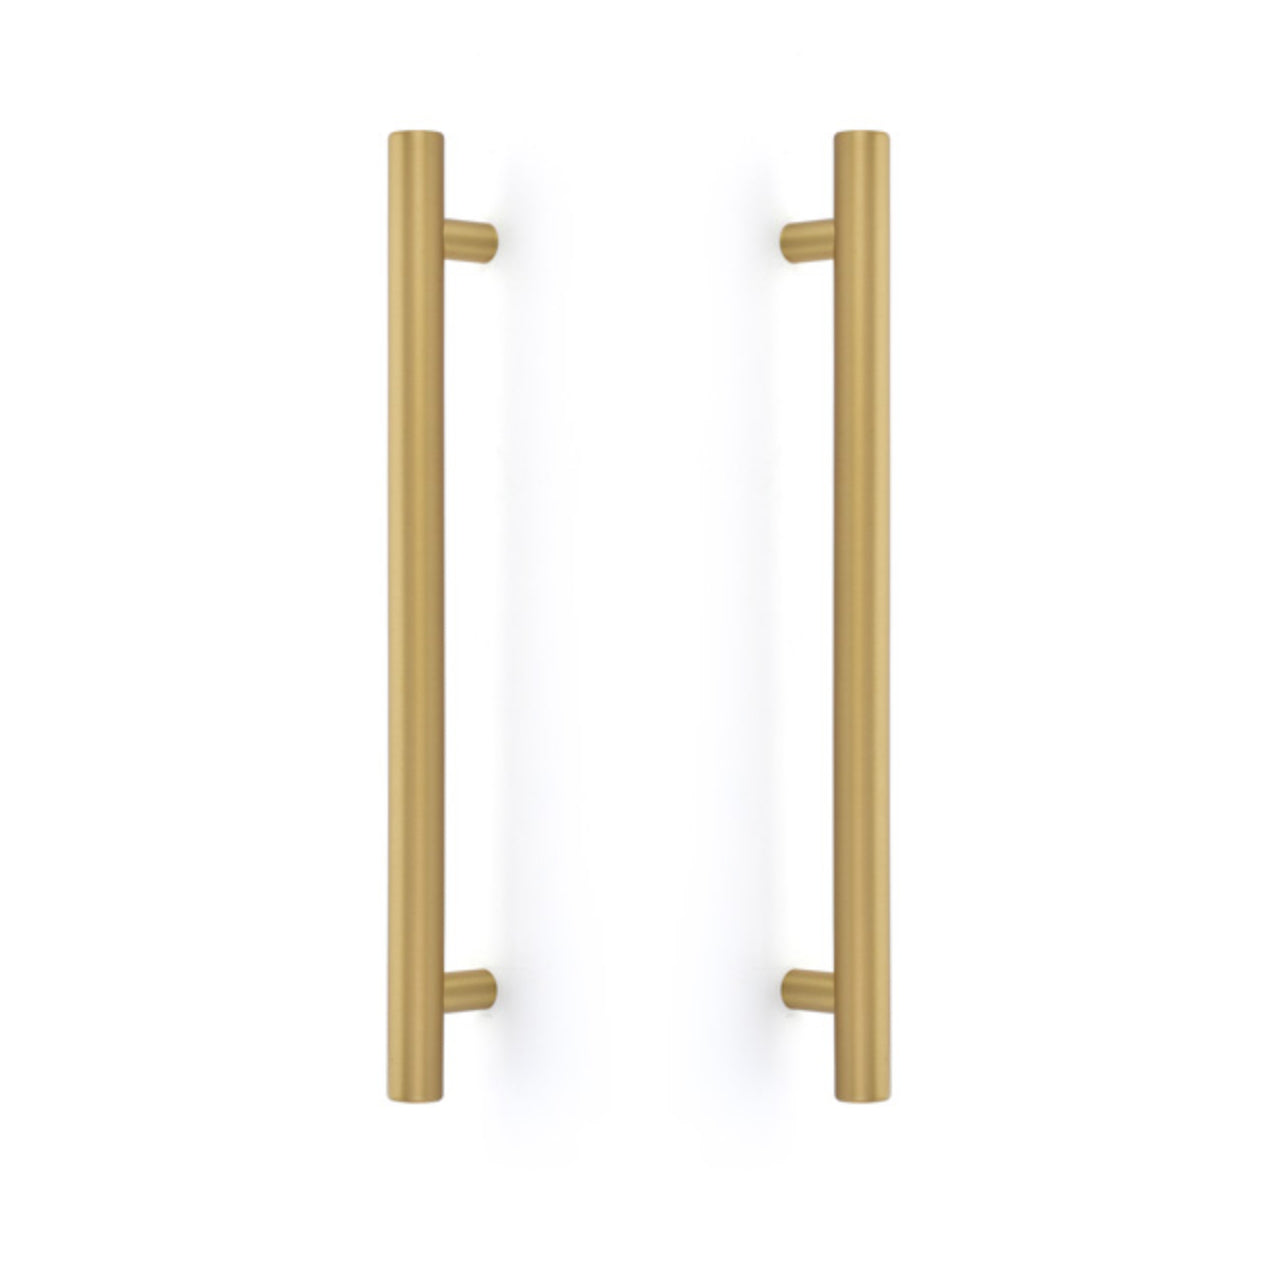 Brass Door Pull Handle at Rs 250/piece